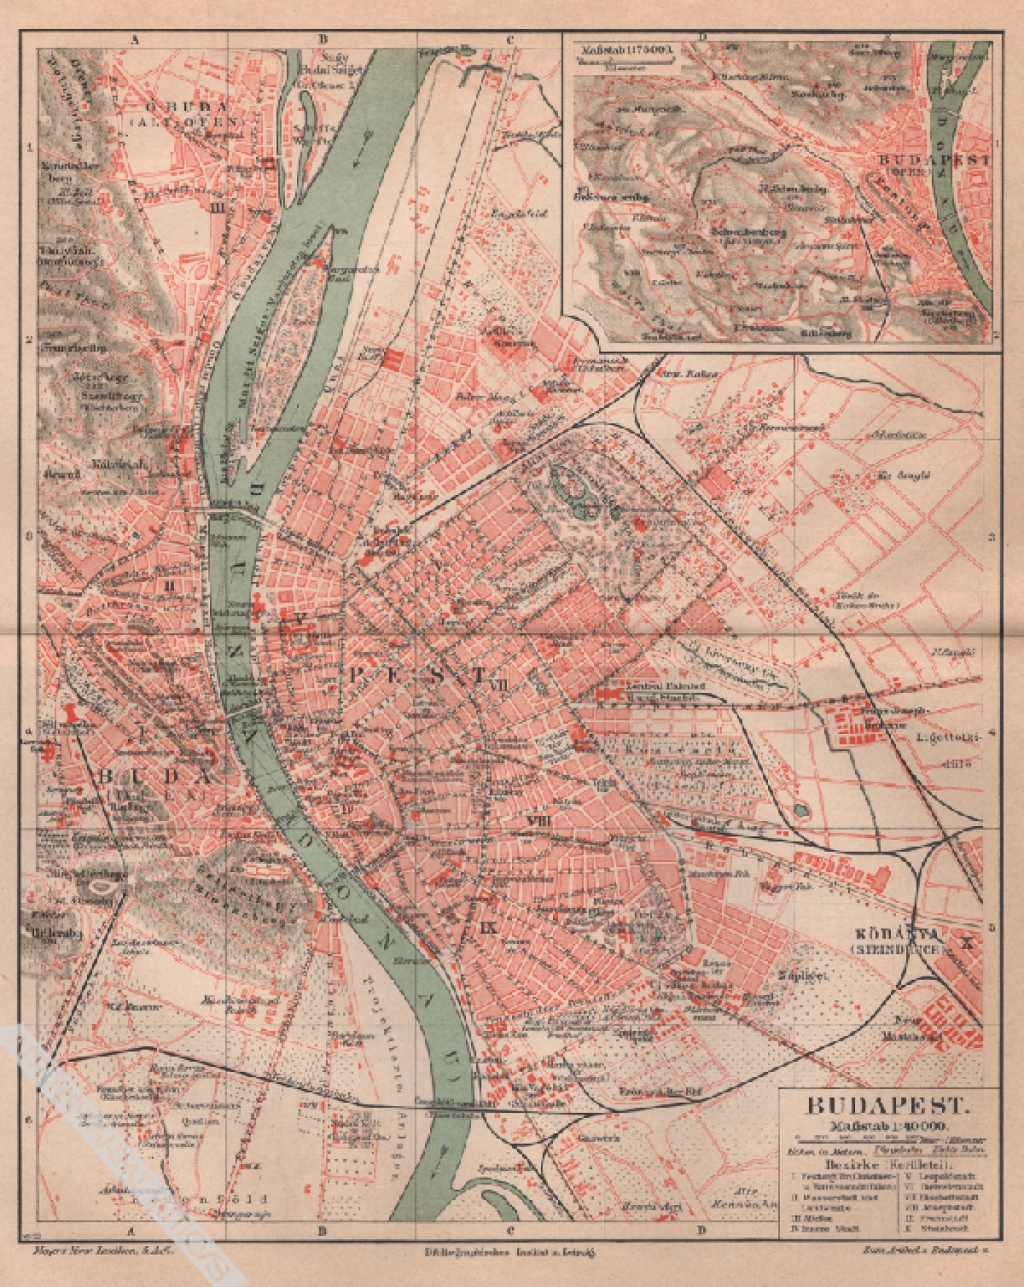 [plan, Budapeszt, 1894] Budapest